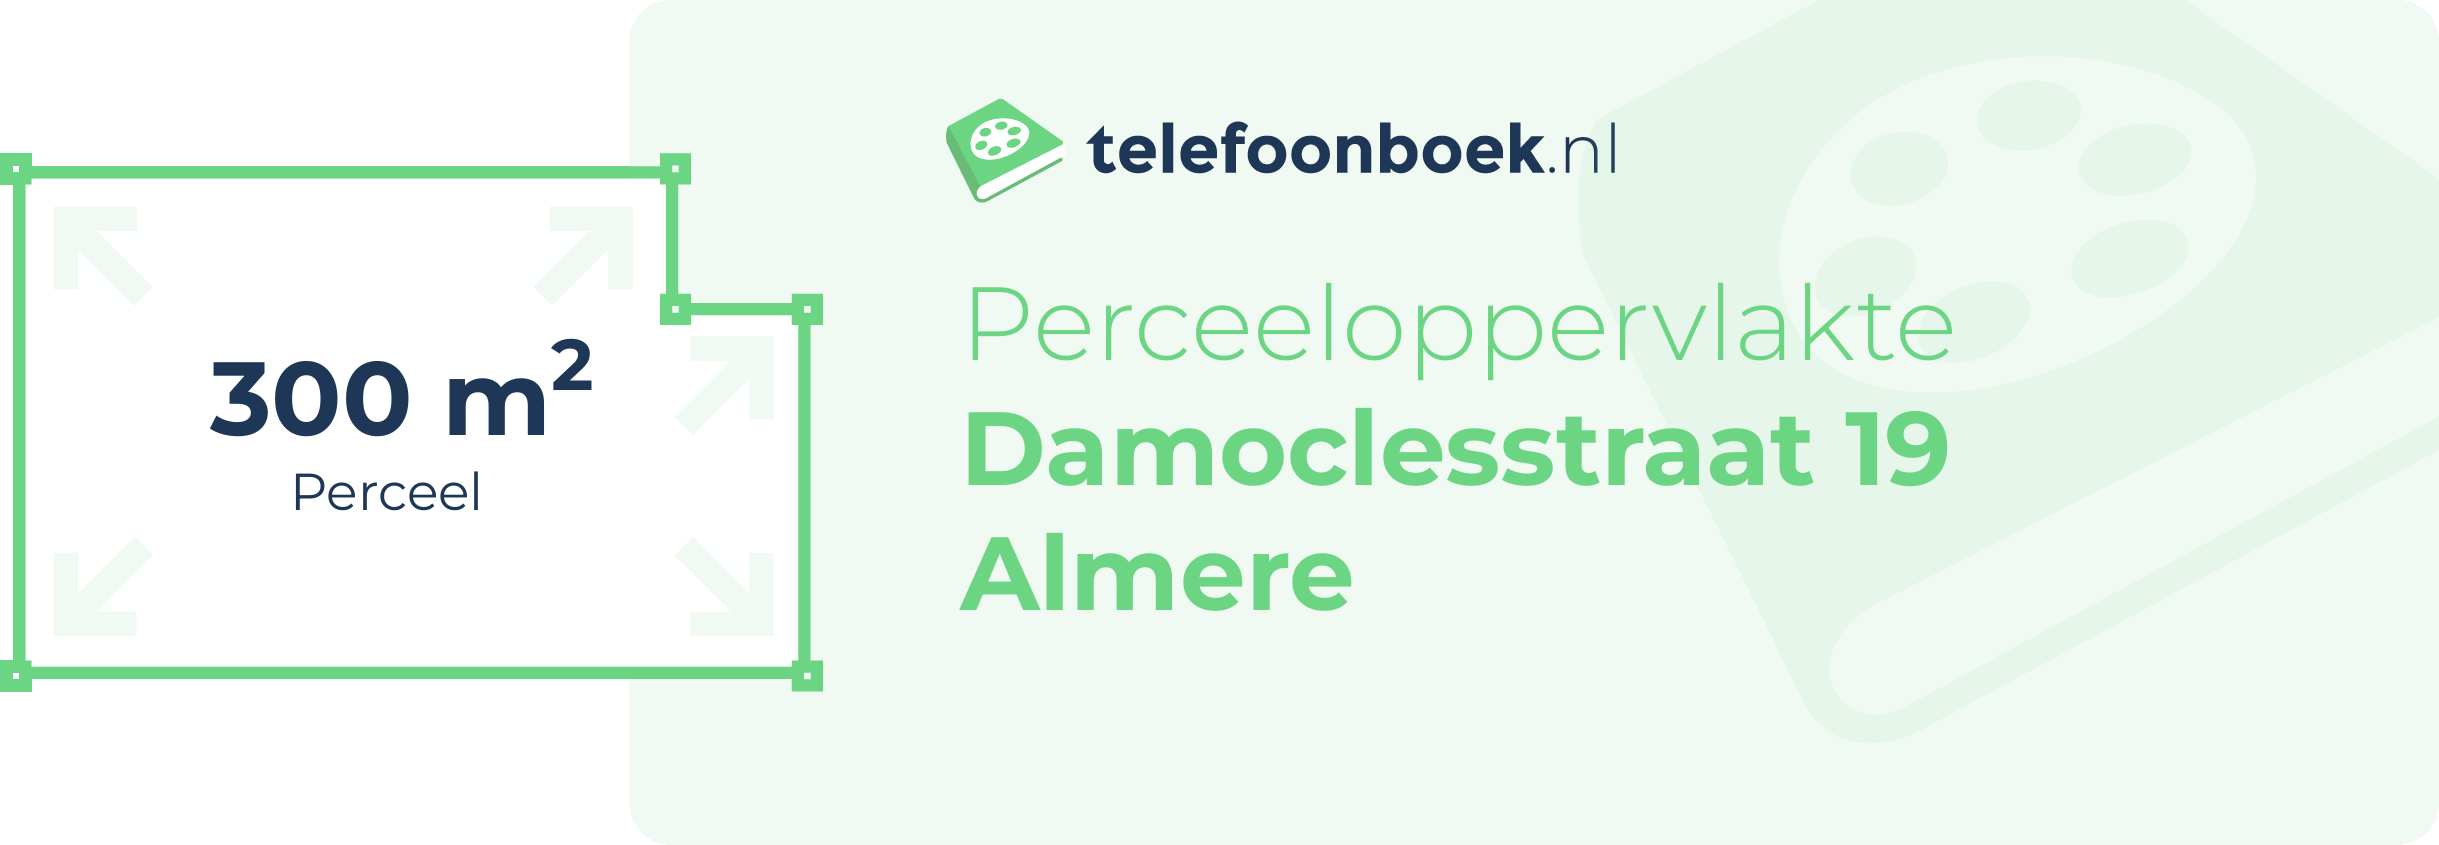 Perceeloppervlakte Damoclesstraat 19 Almere